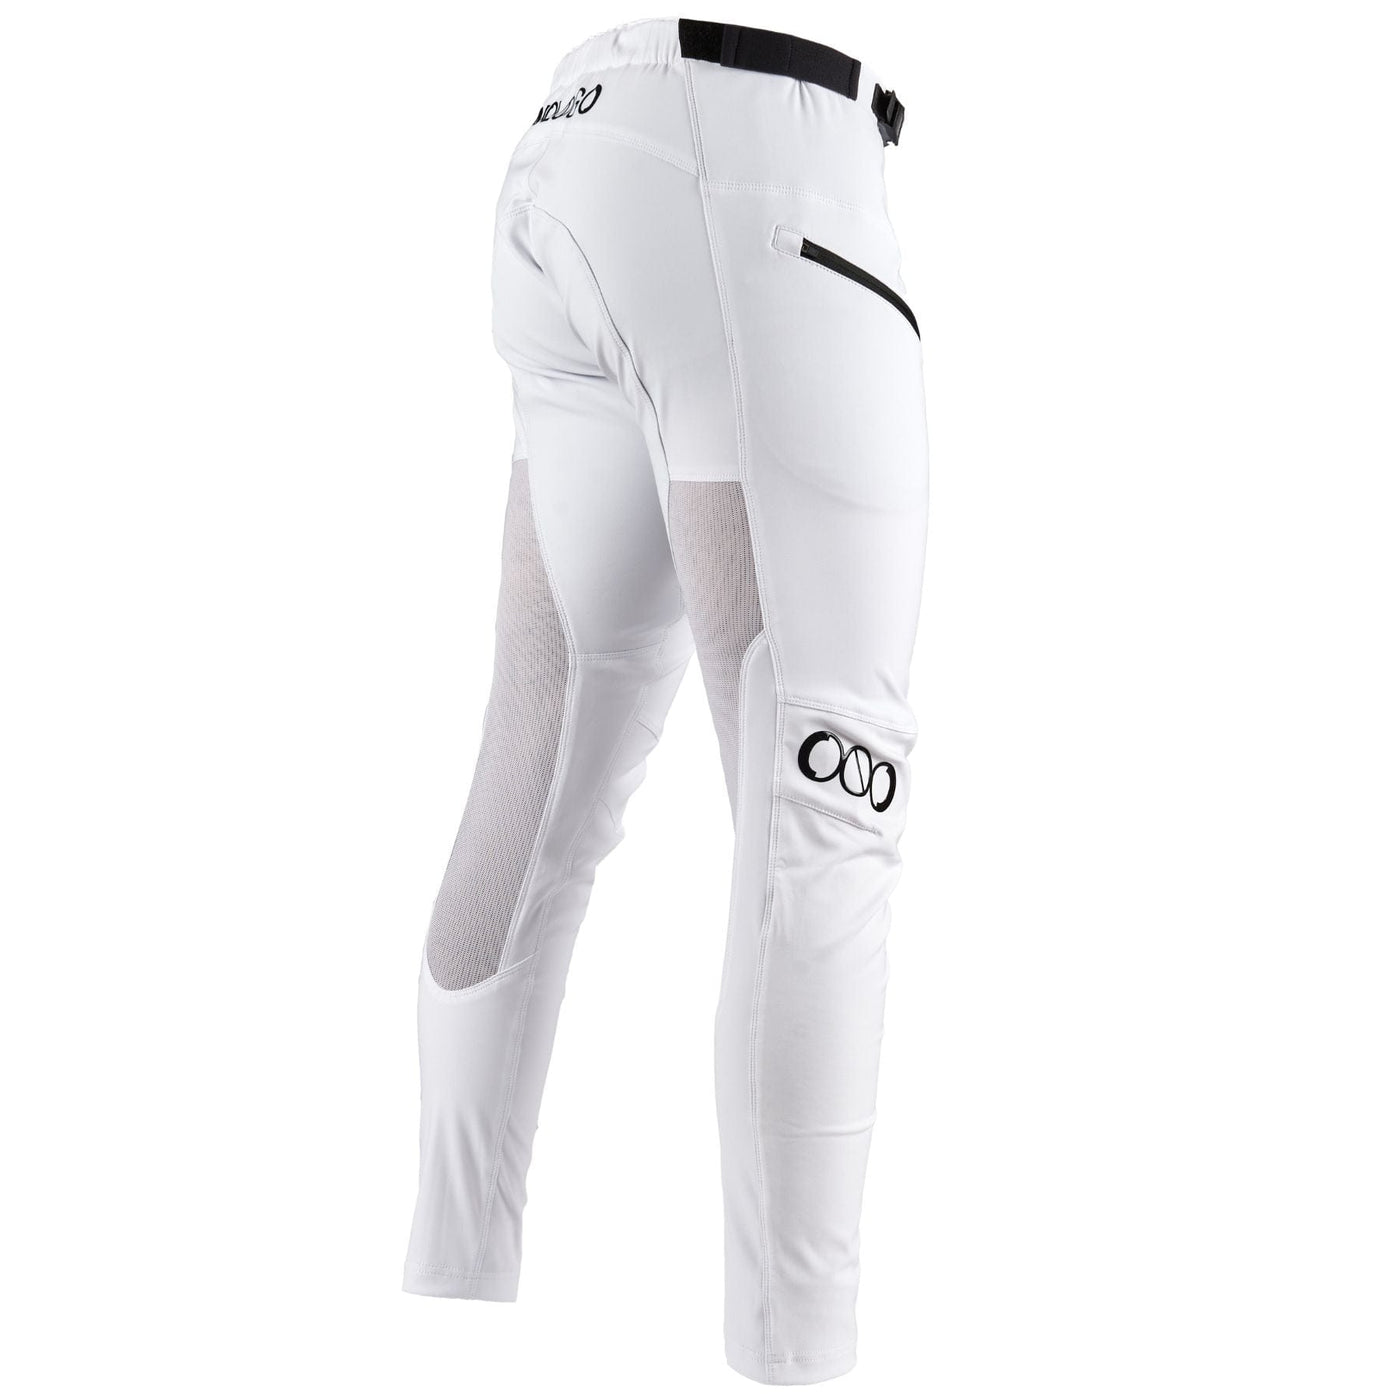 NoLogo Racer Youth BMX Pants - White